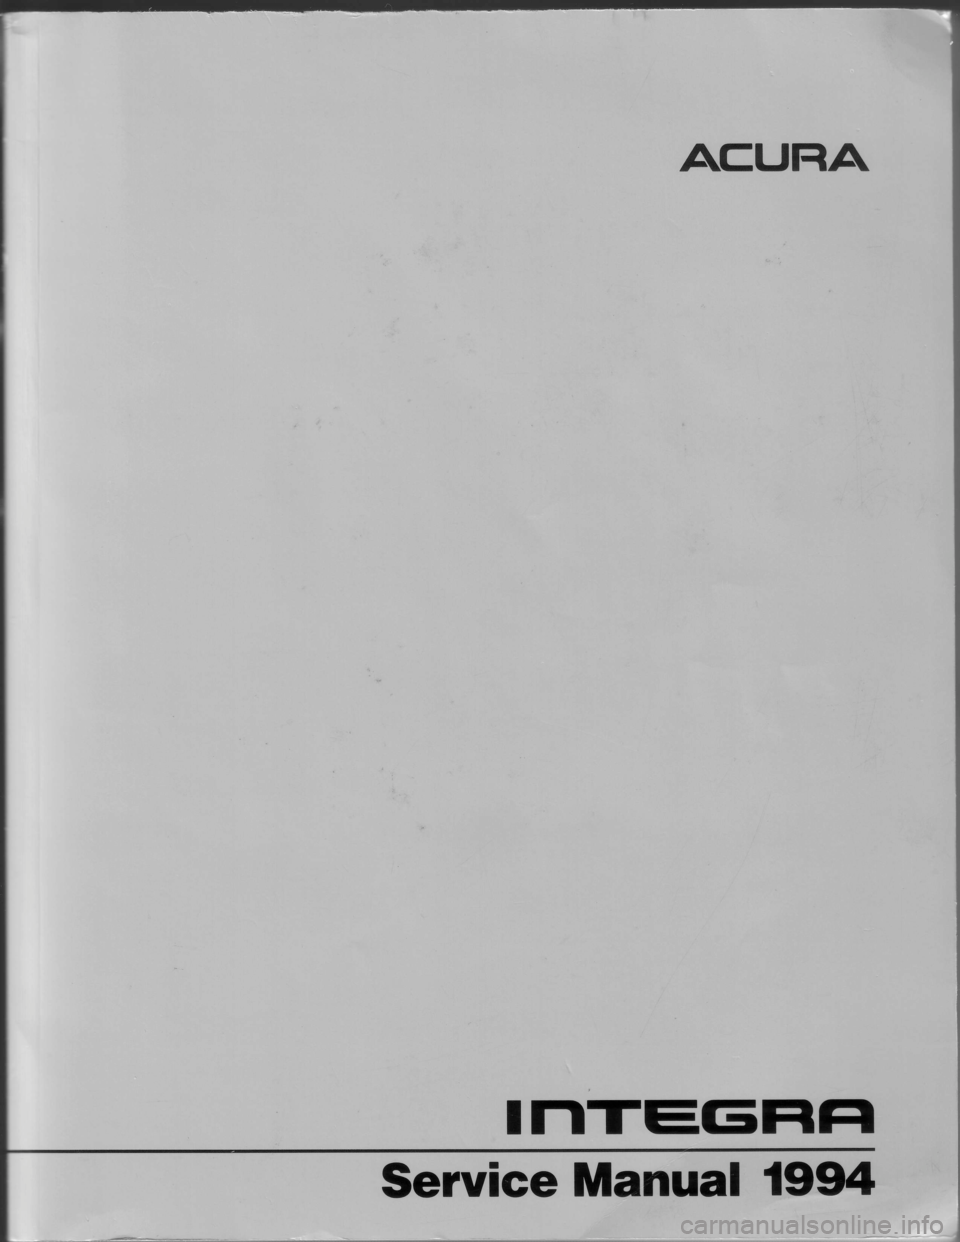 ACURA INTEGRA 1994  Service Repair Manual ACUrj|A
INTEGFIF|
Service Manual 1994 